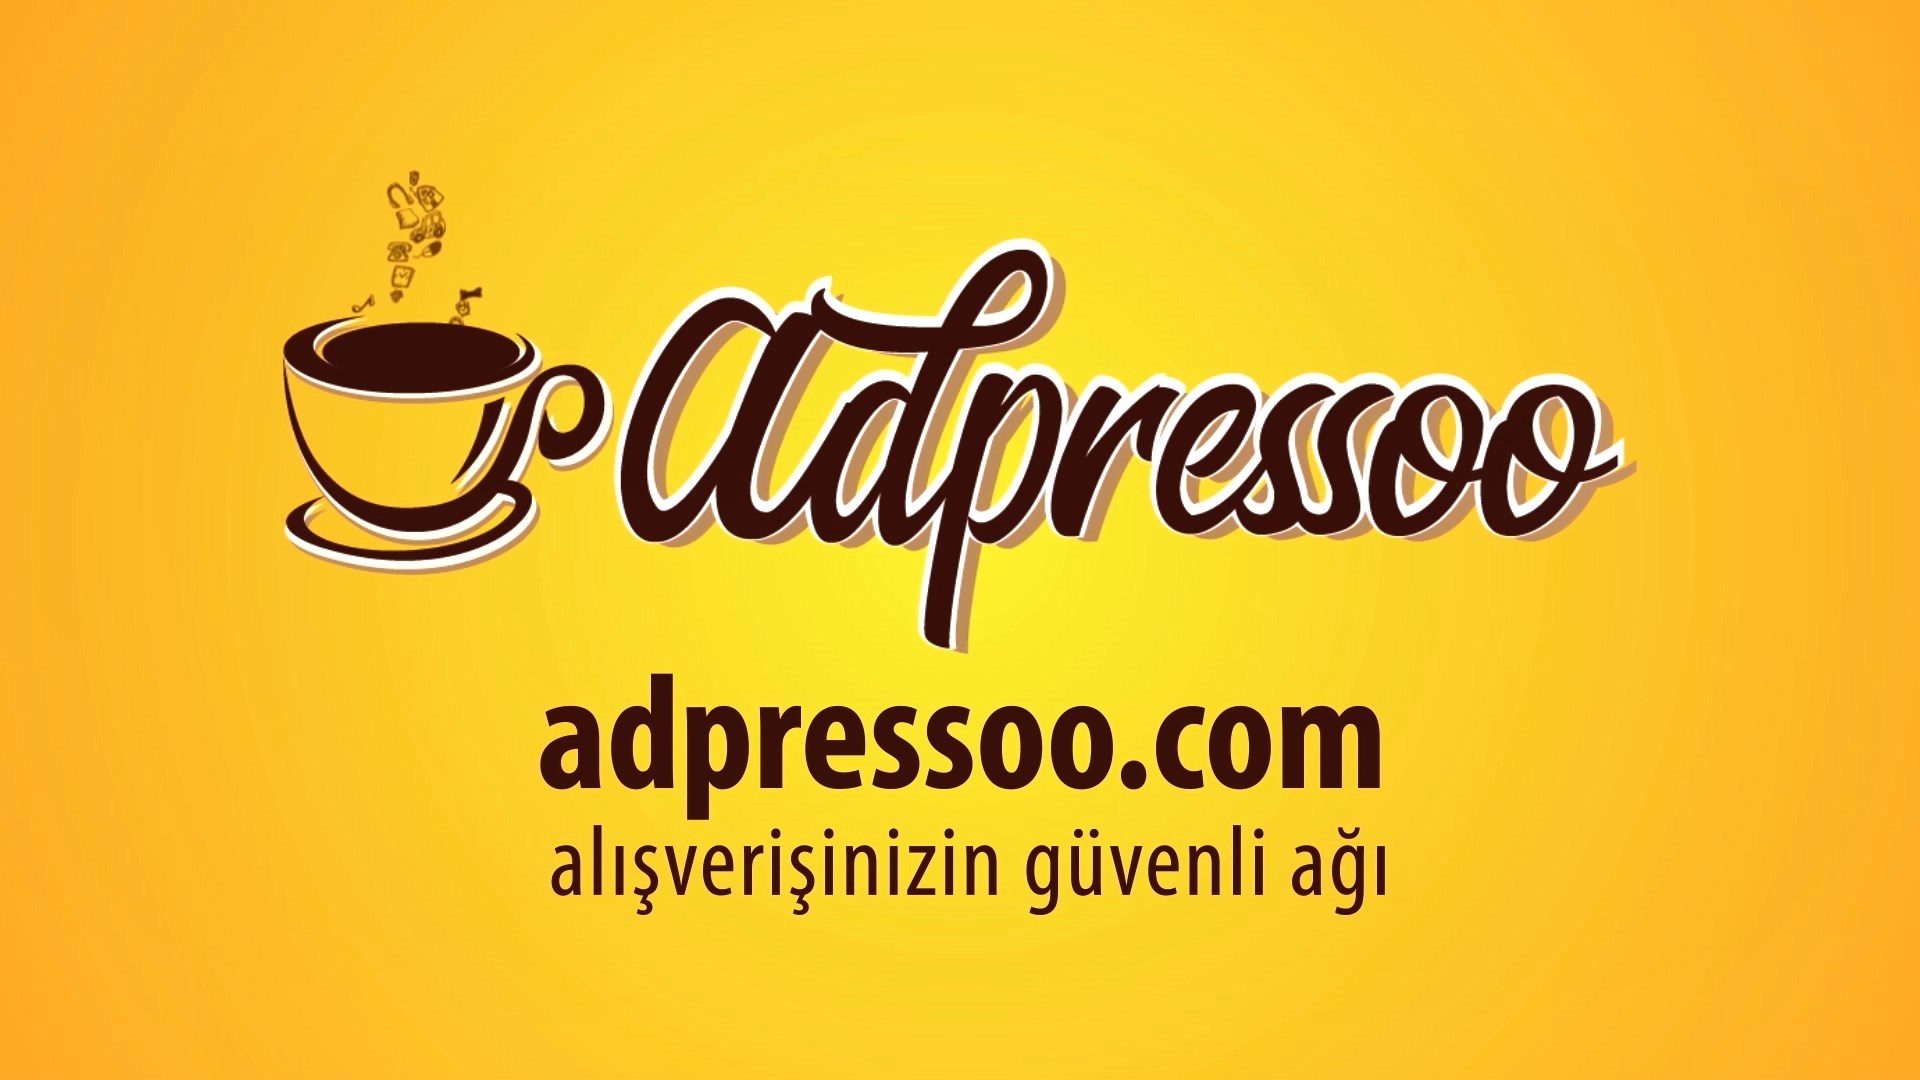 aspressoo.com 9 1920x1080 - ADPRESSOO TANITIM ANİMSYON FİLMİ